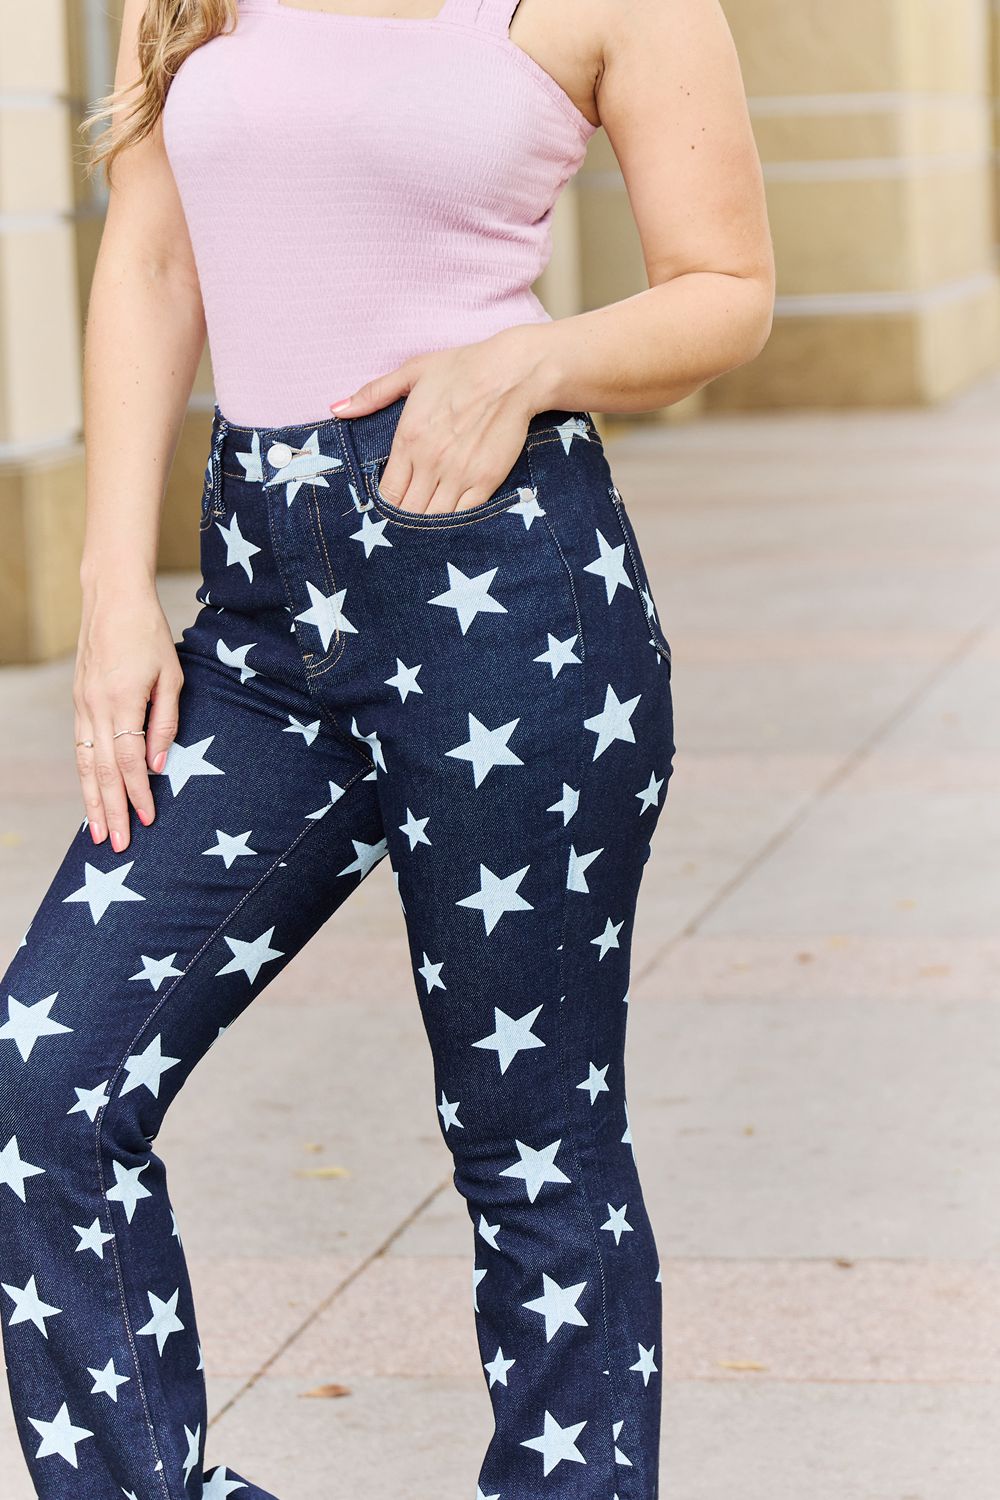 Judy Blue Janelle Full Size High Waist Star Print Flare Jeans - Tigbul's Fashion